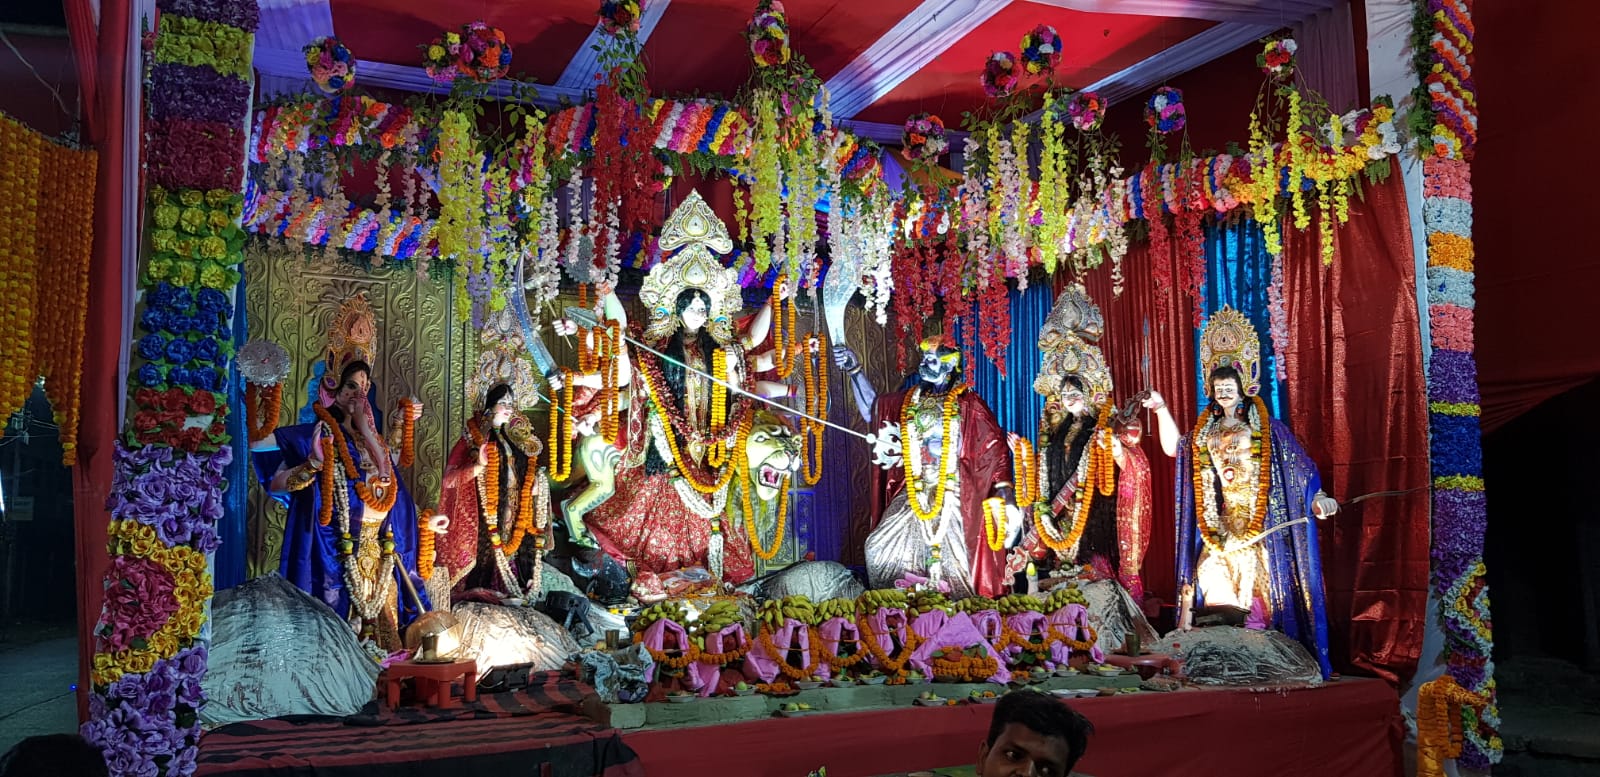 Juran chapra Durga Puja Near Bus Stand 2